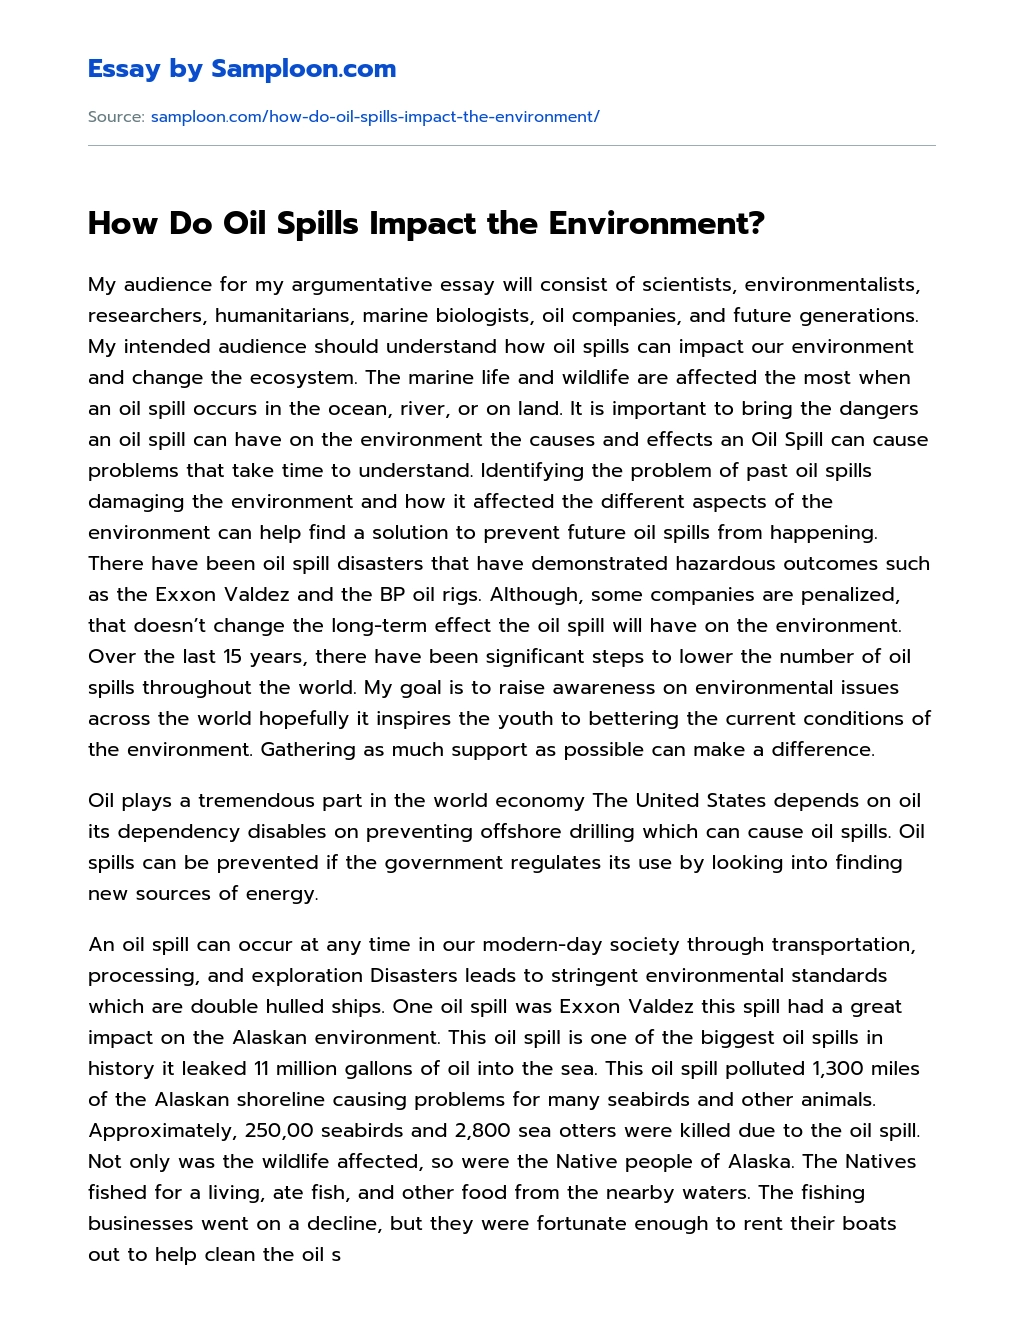 How Do Oil Spills Impact the Environment? Argumentative Essay essay